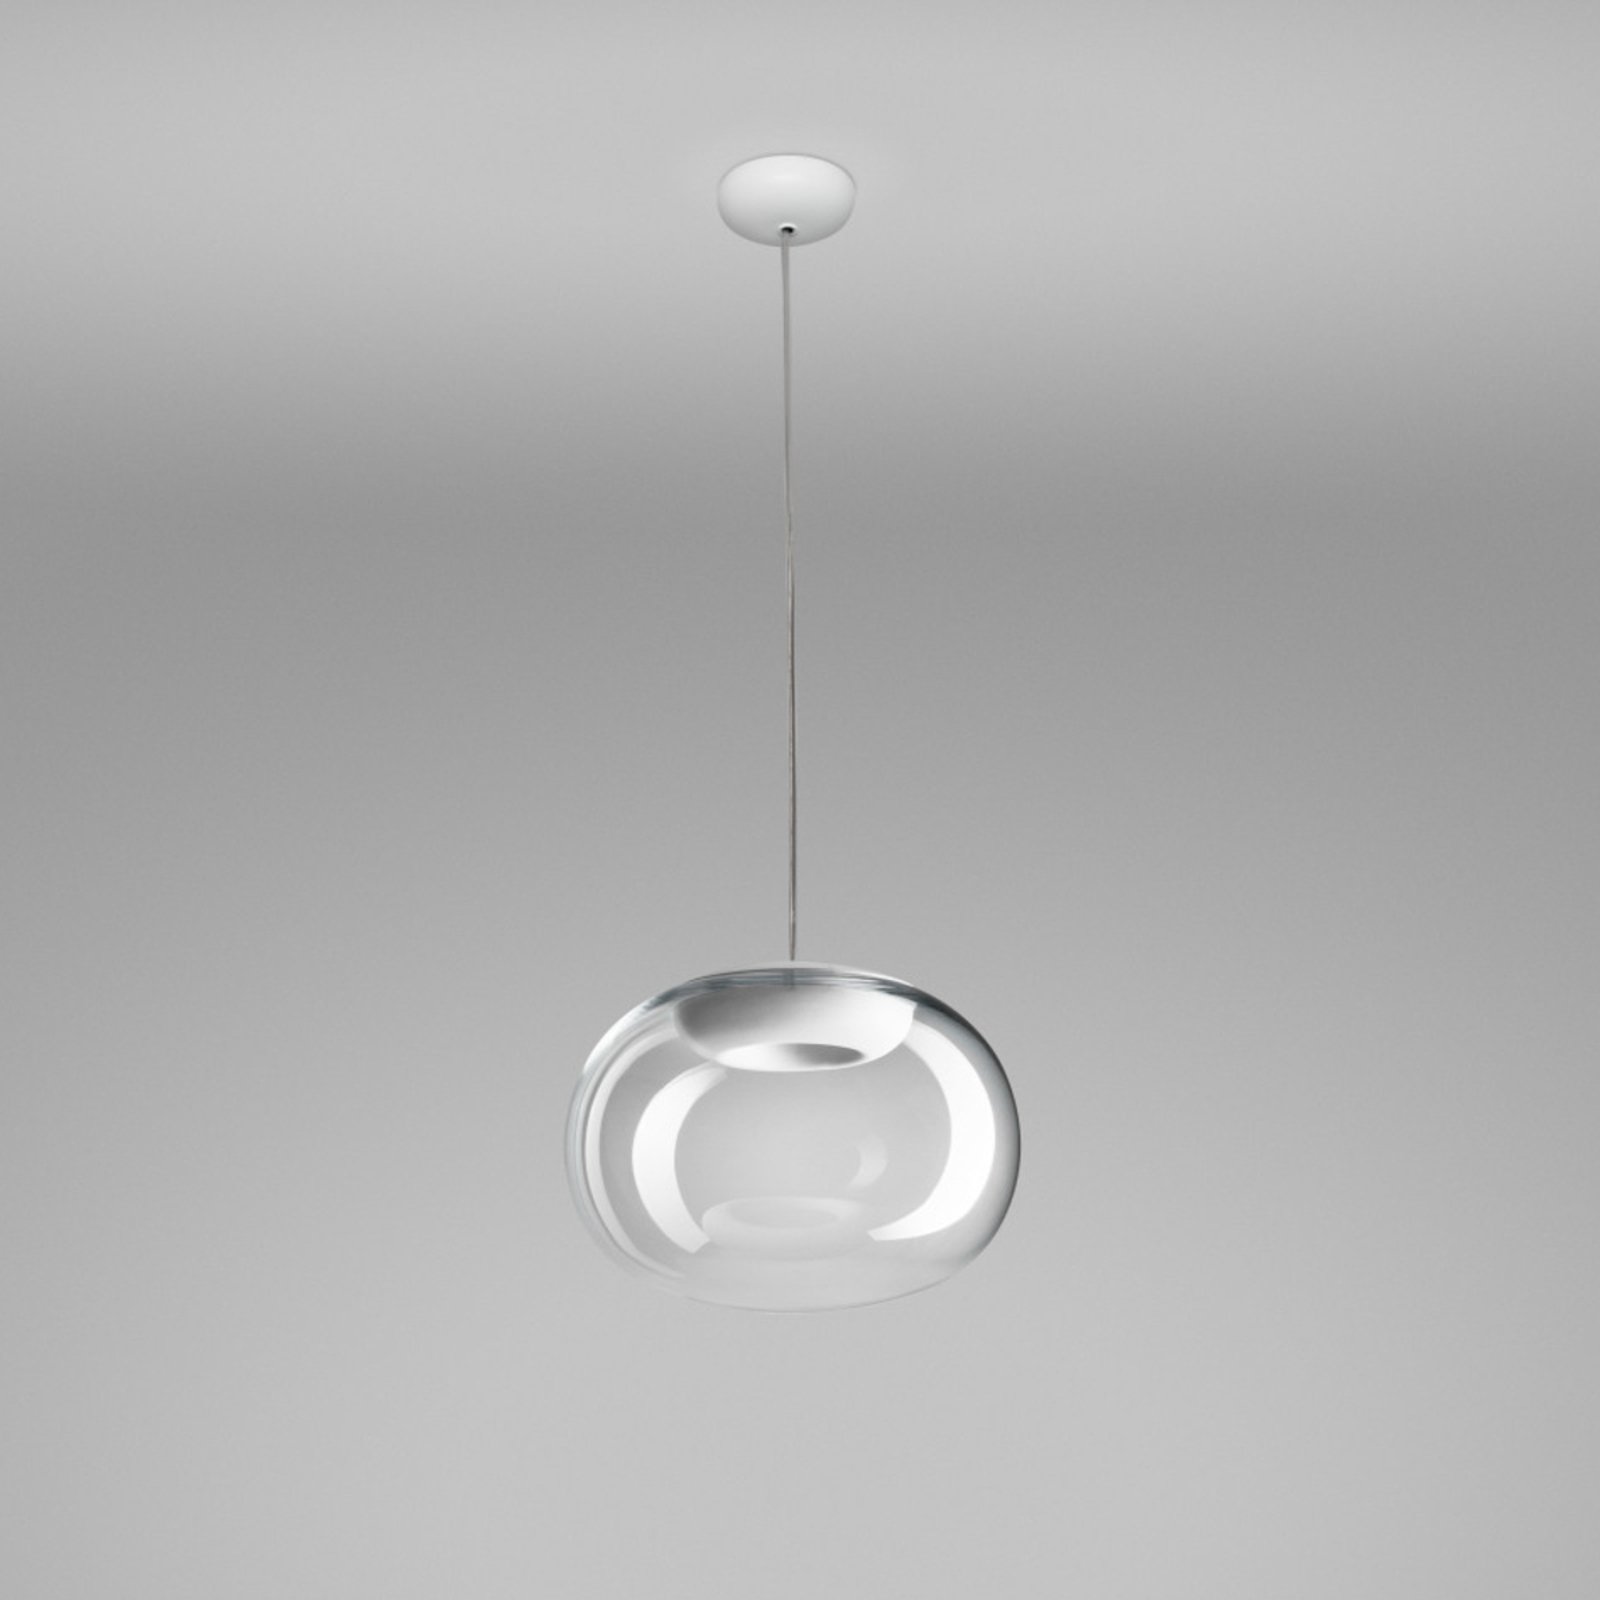 Stilnovo La Mariée LED-Hängelampe transparent/weiß